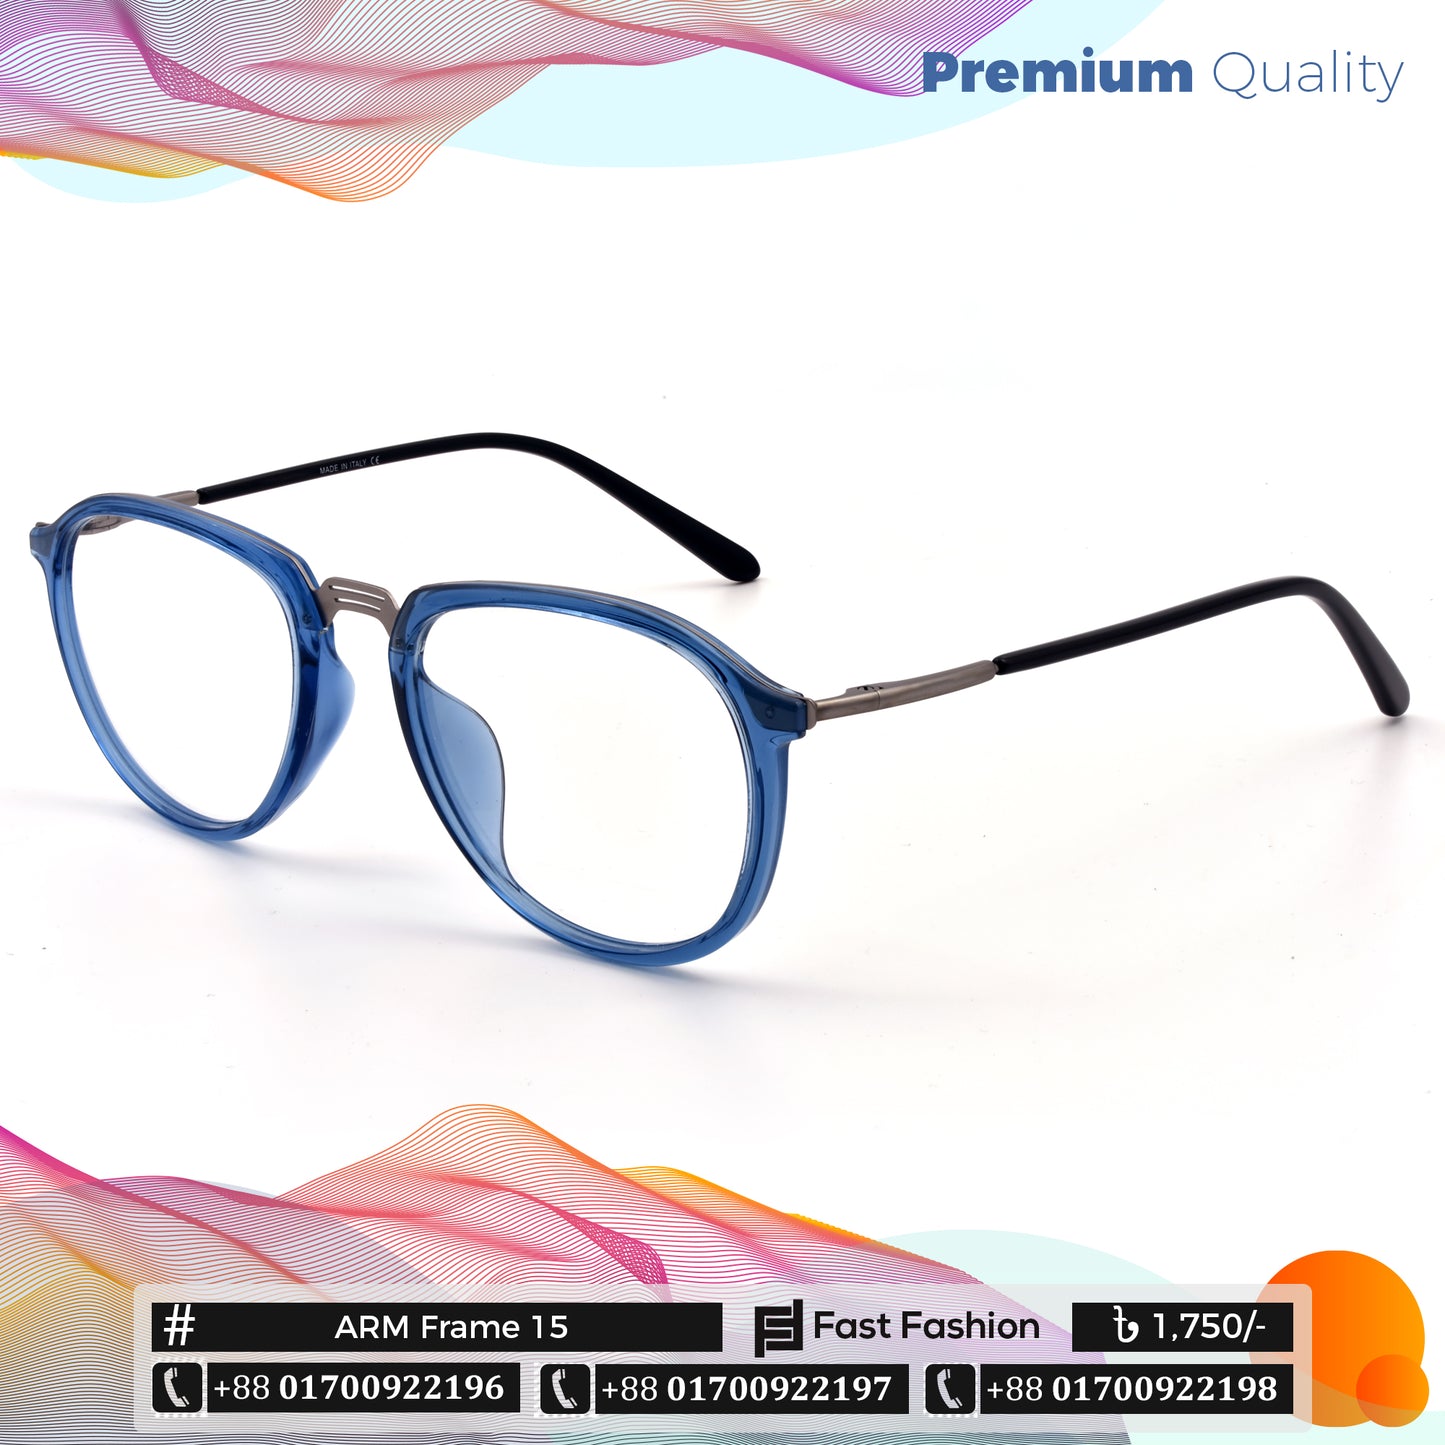 Premium Quality Trendy Stylish Optic Frame | ARM Frame 15